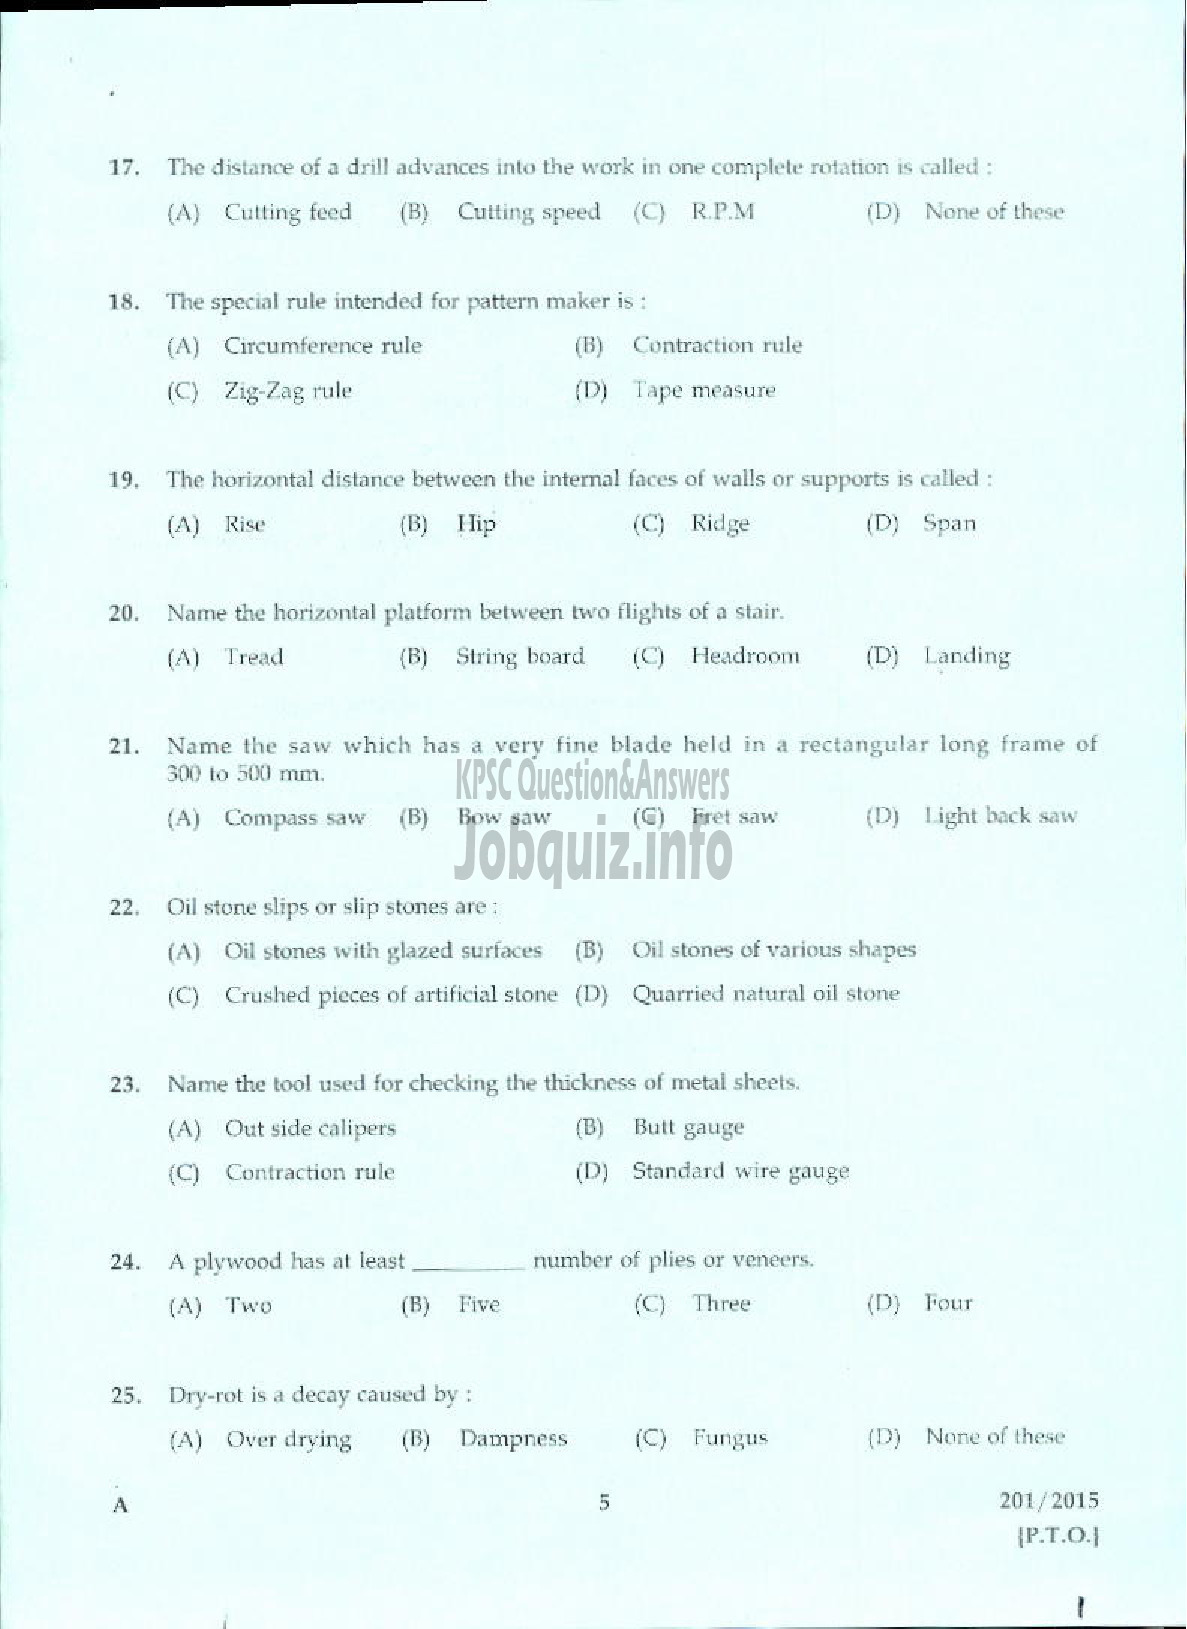 Kerala PSC Question Paper - TRADESMAN CARPENTRY TECHNICAL EDUCATION-3